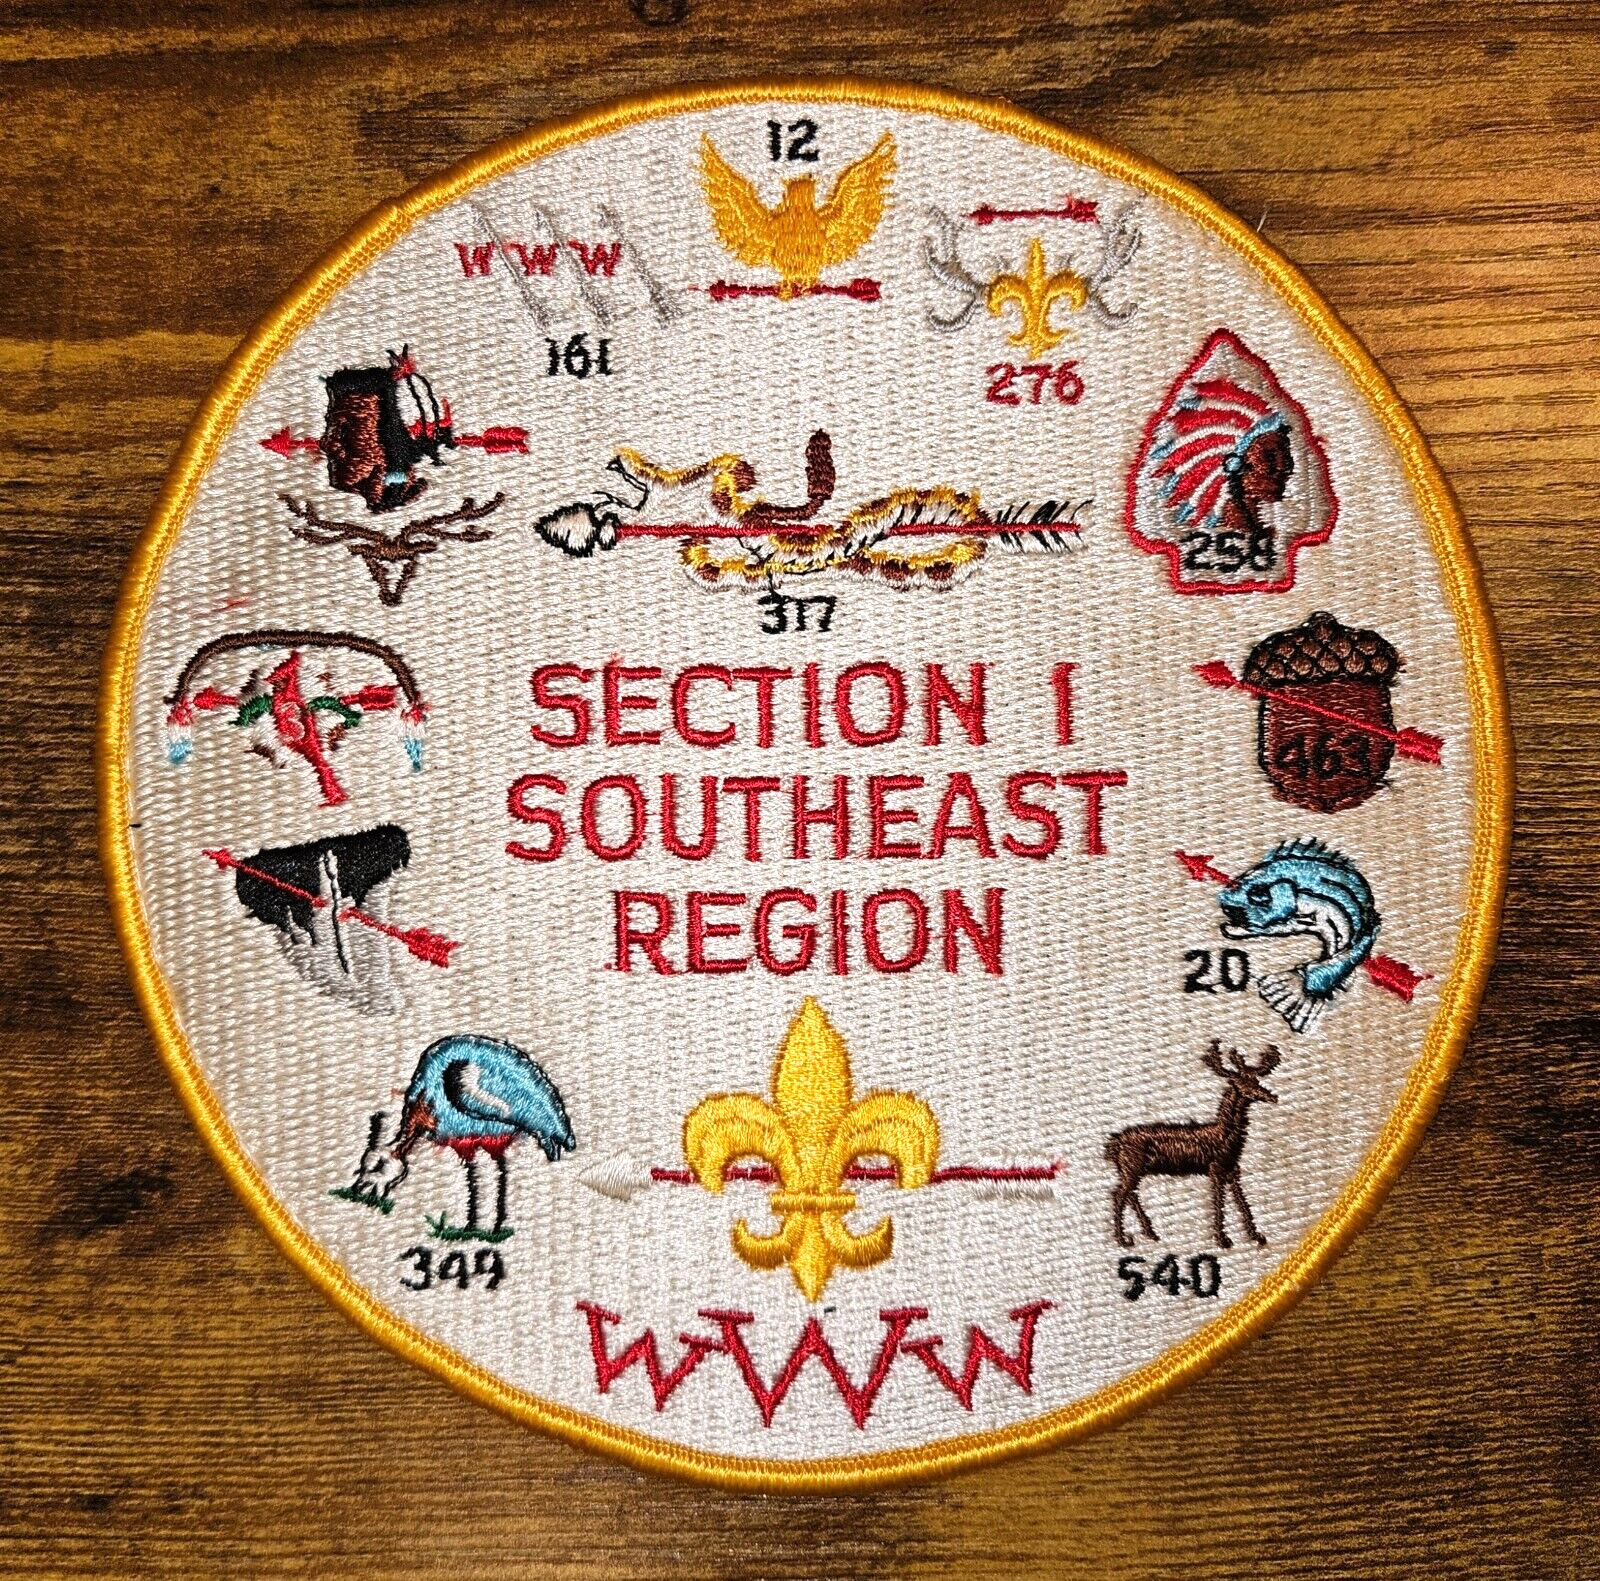 Section 1 Southeast Region 7 Inch Jacket Patch Nentico Nentego Wipit 470 Lodges